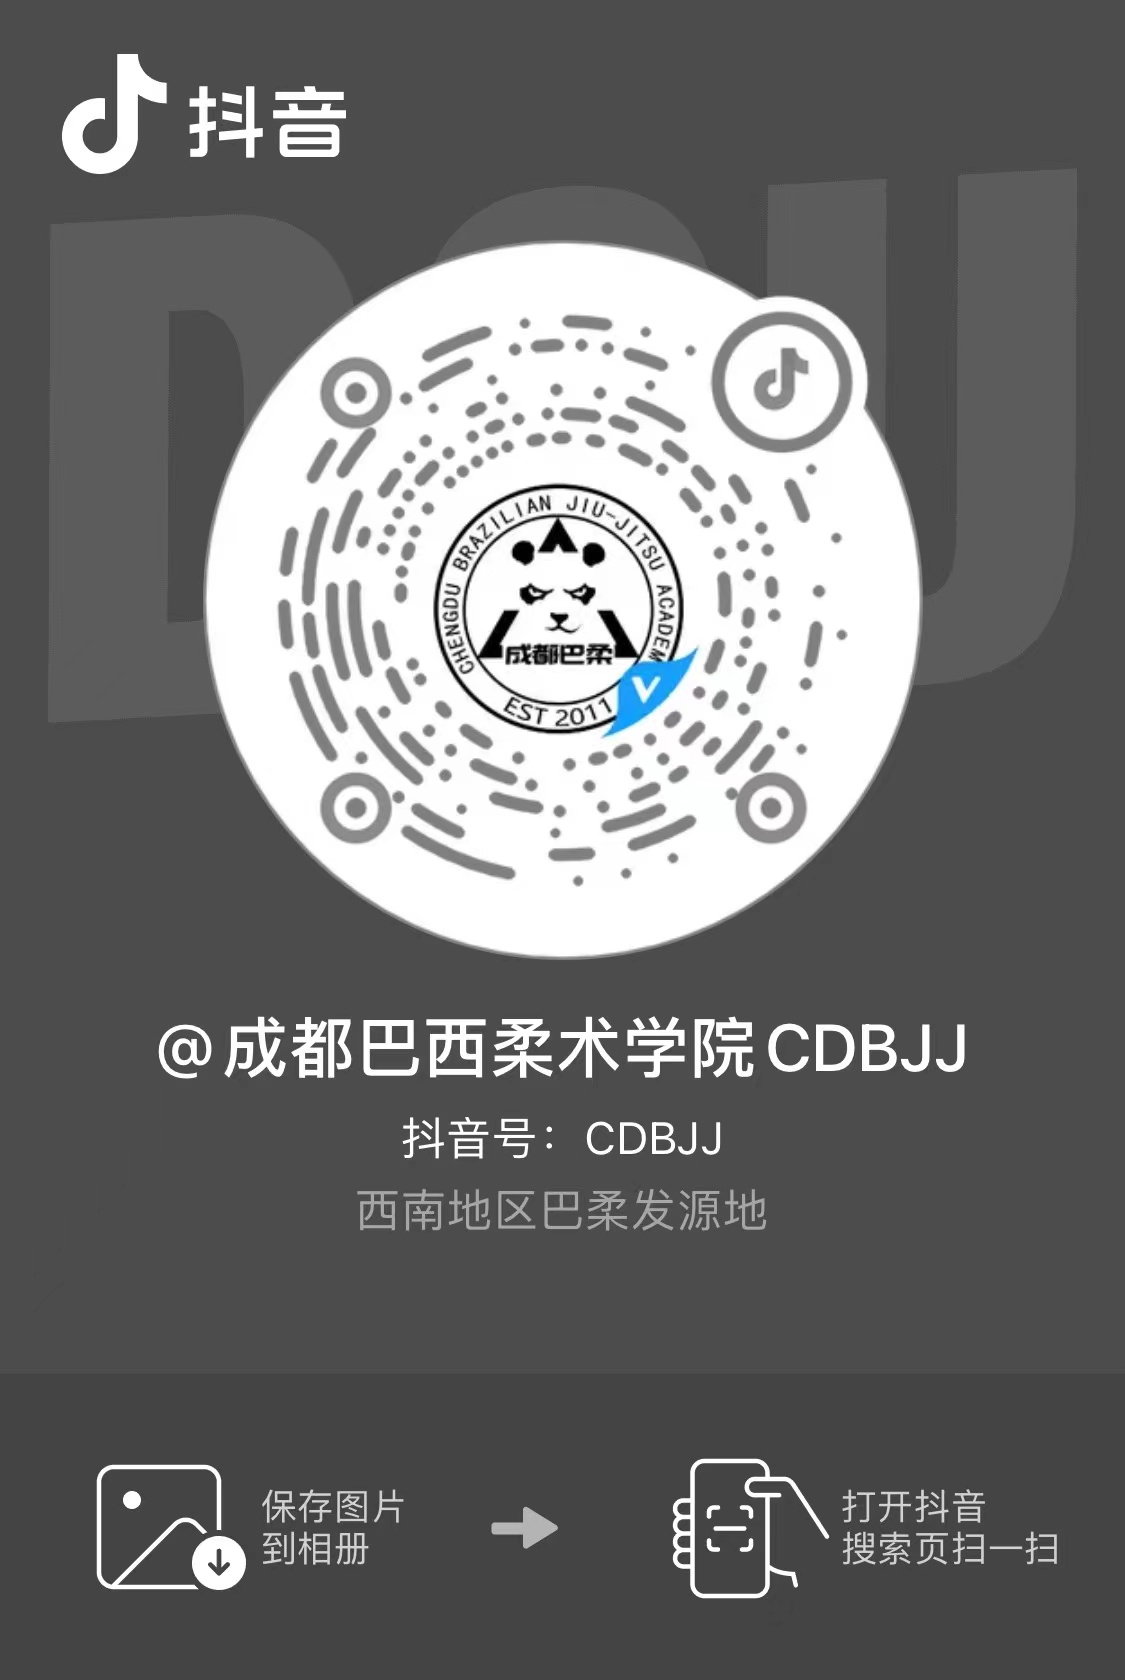 CDBJJ(抖音企业账号)